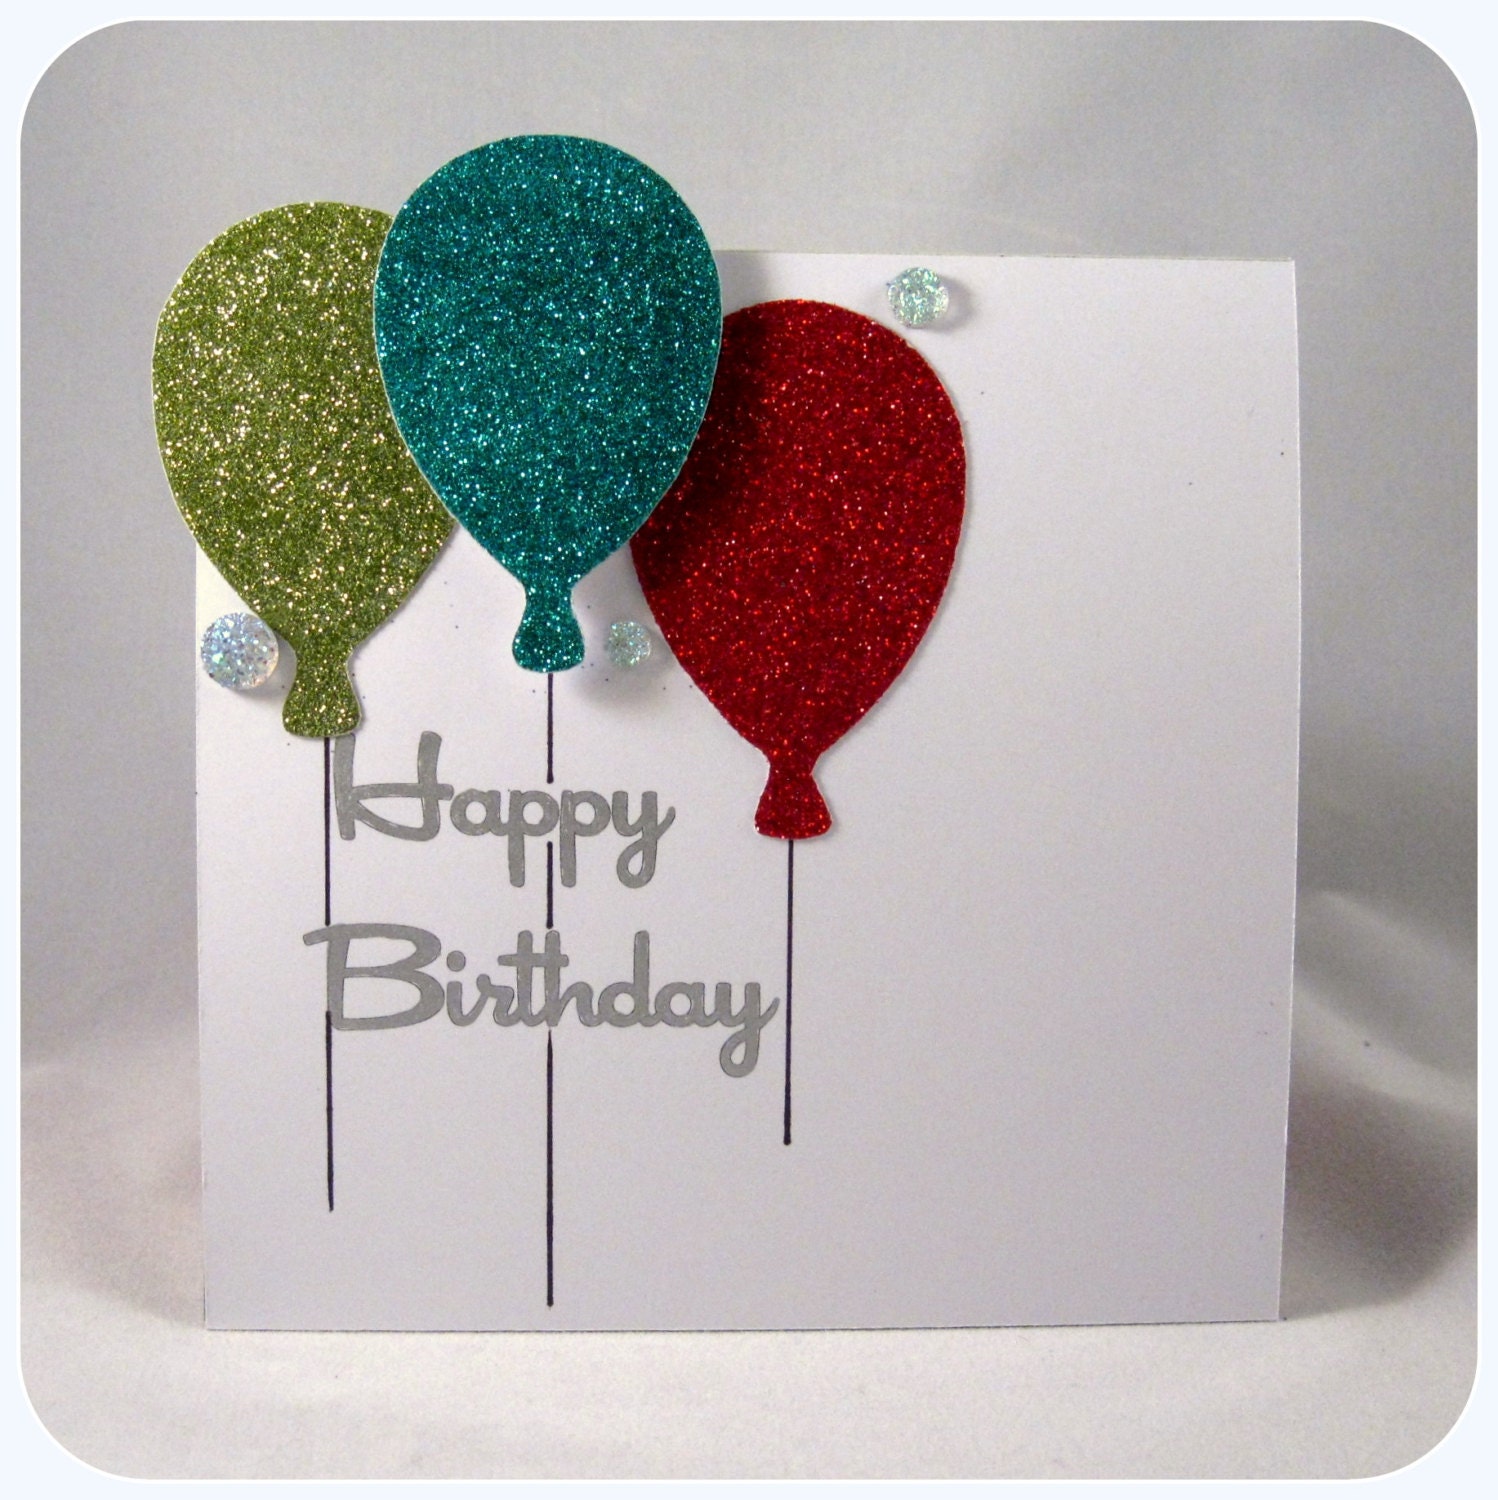 Happy Birthday with balloons blank card | Etsy